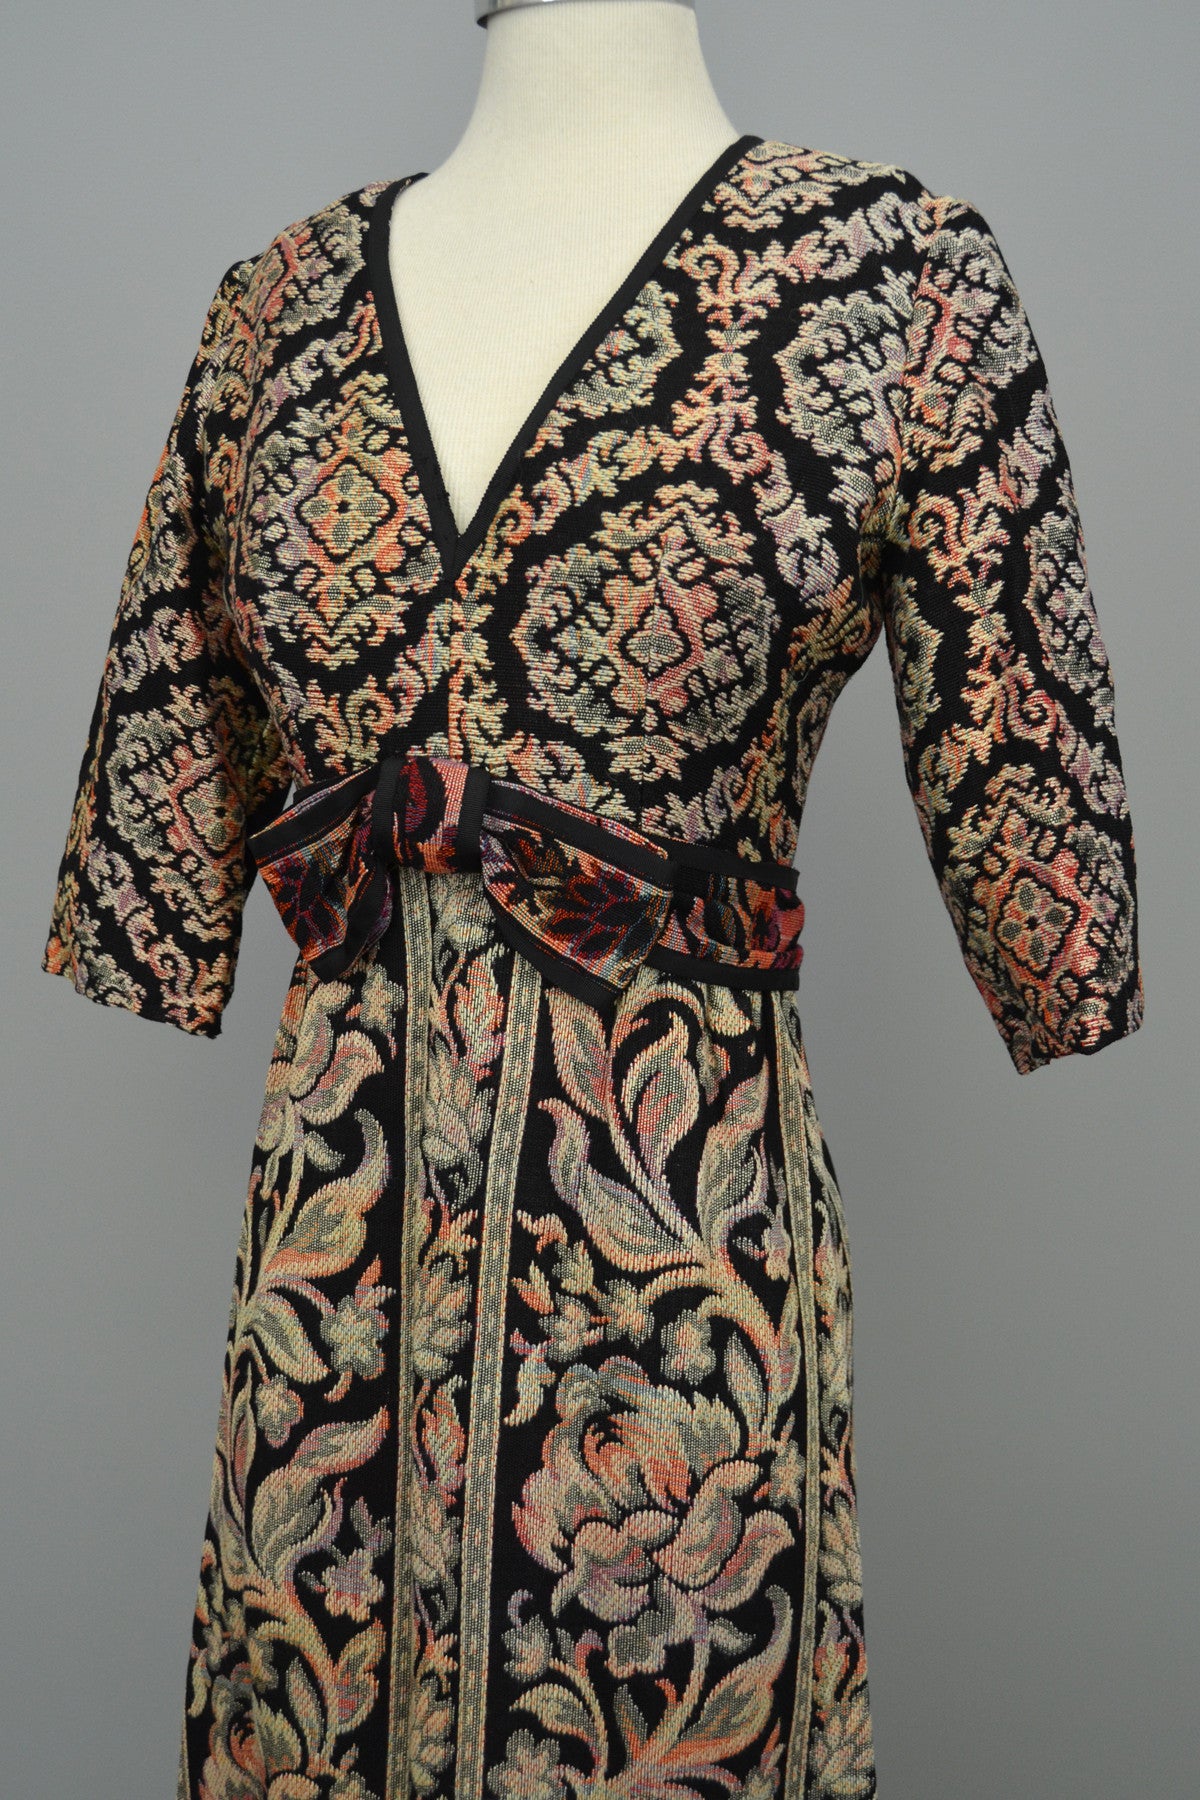 1970s Floral Tapestry Boho Festival Maxi Dress